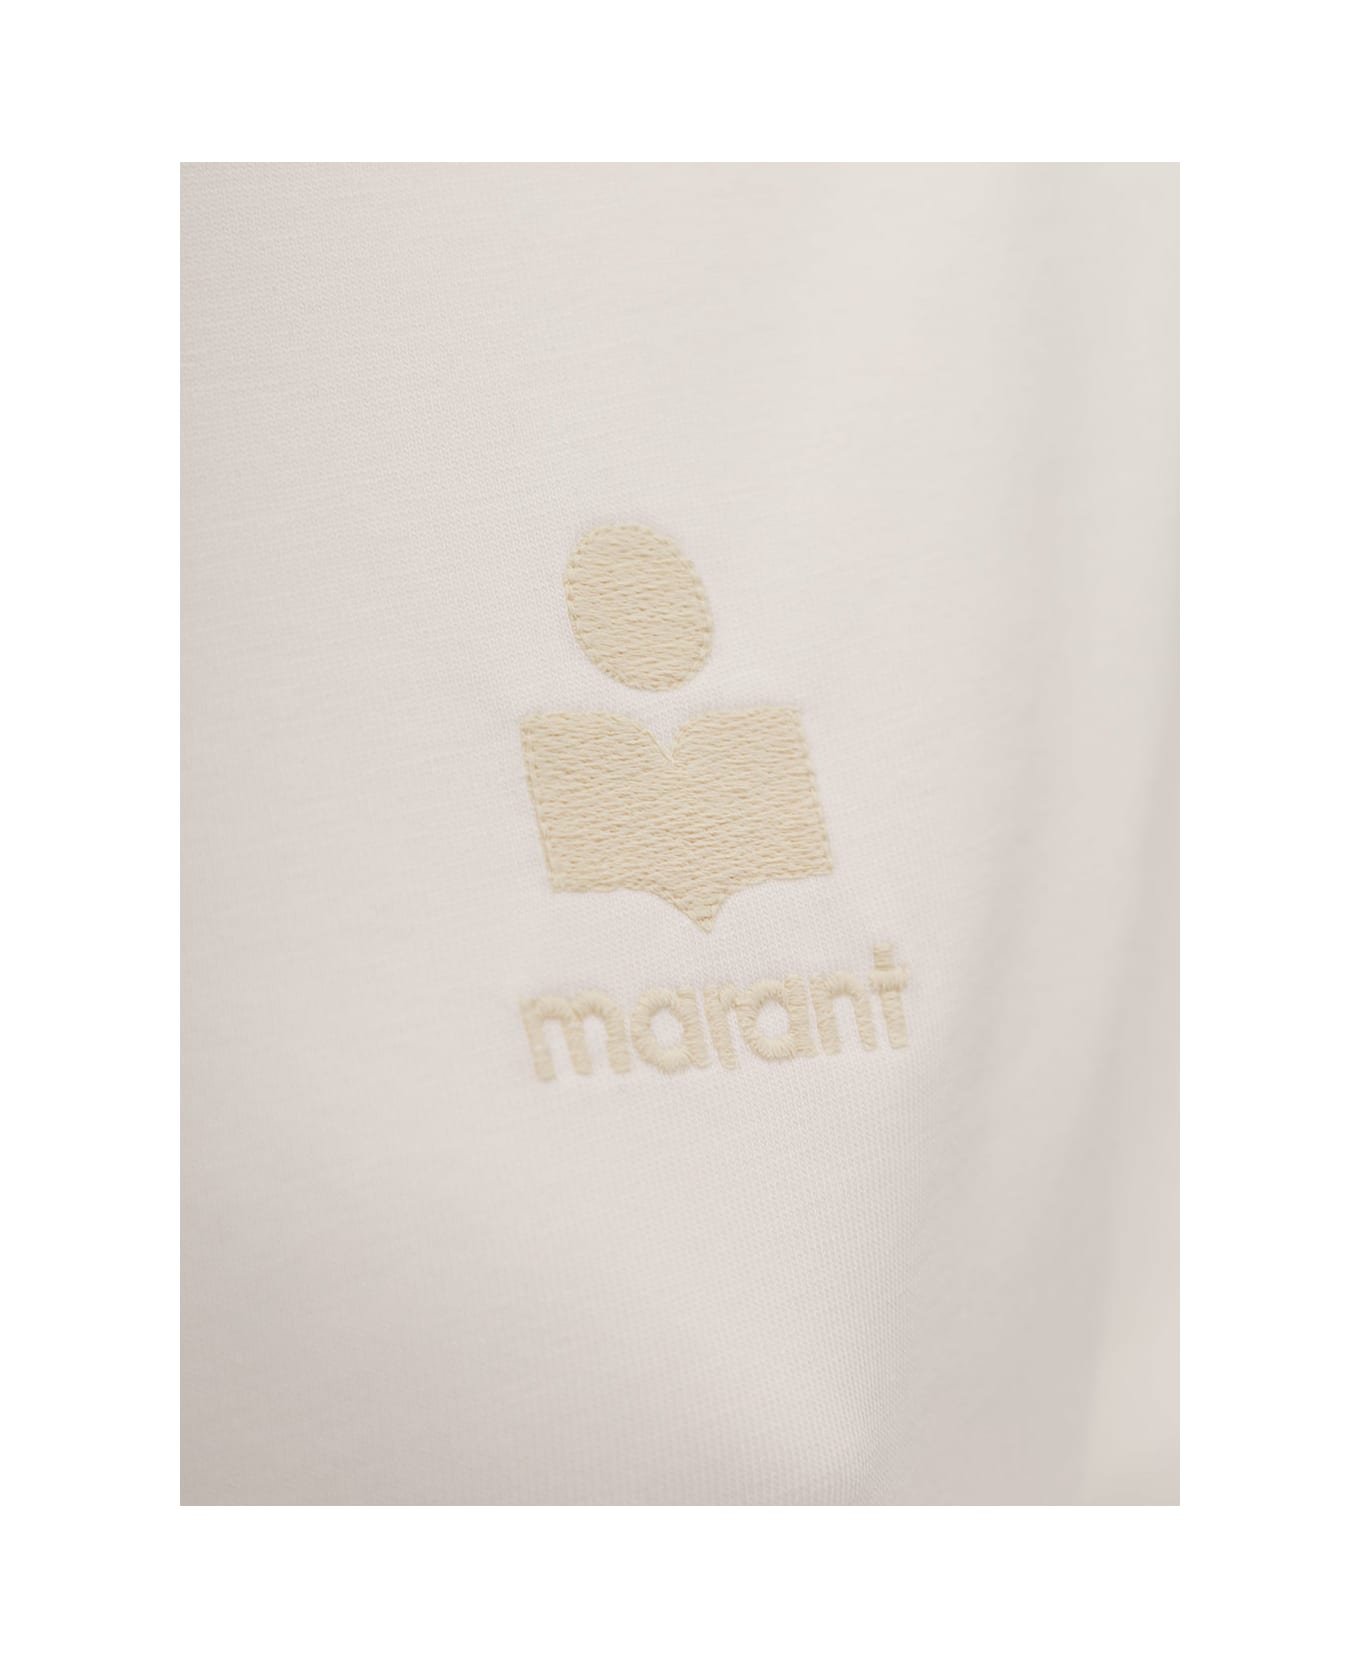 Marant Étoile 'aby' White Crewneck T-shirt With Small Logo Print Woman Isabel Marant Etoile - White